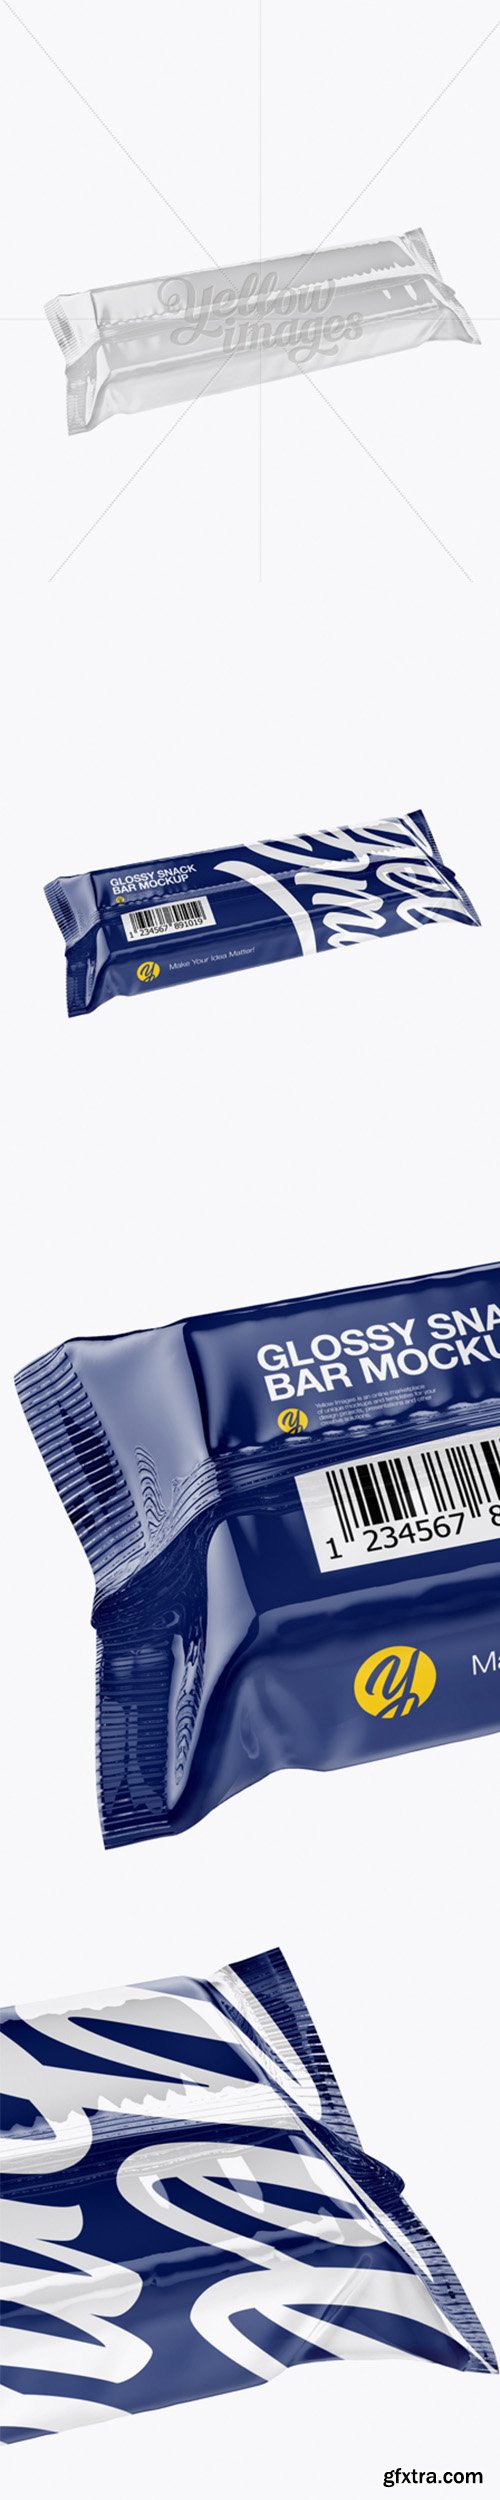 Glossy Snack Bar Mockup - Back Half Side View (High-Angle Shot) 18966